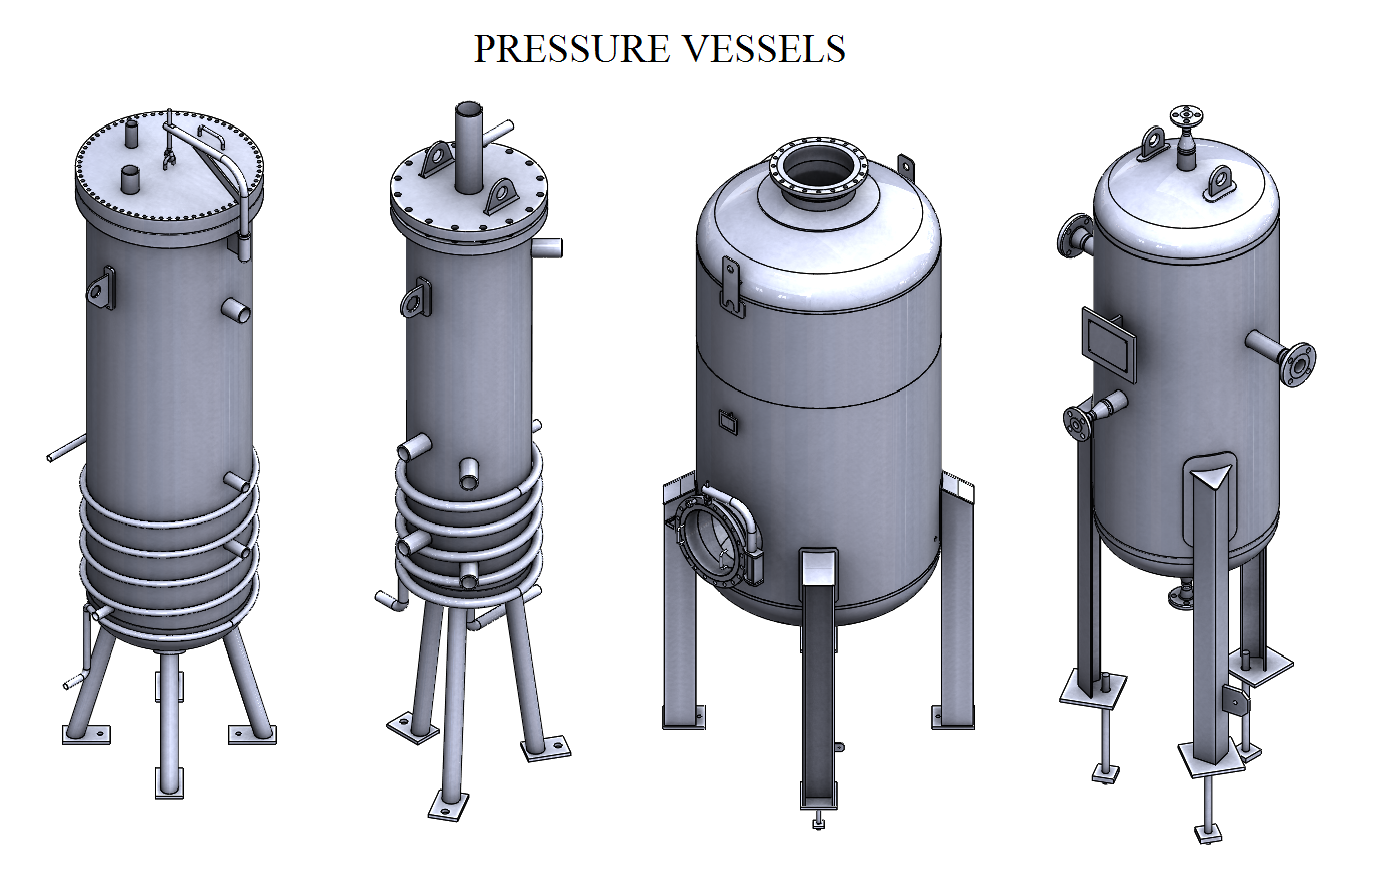 Pressure vessels